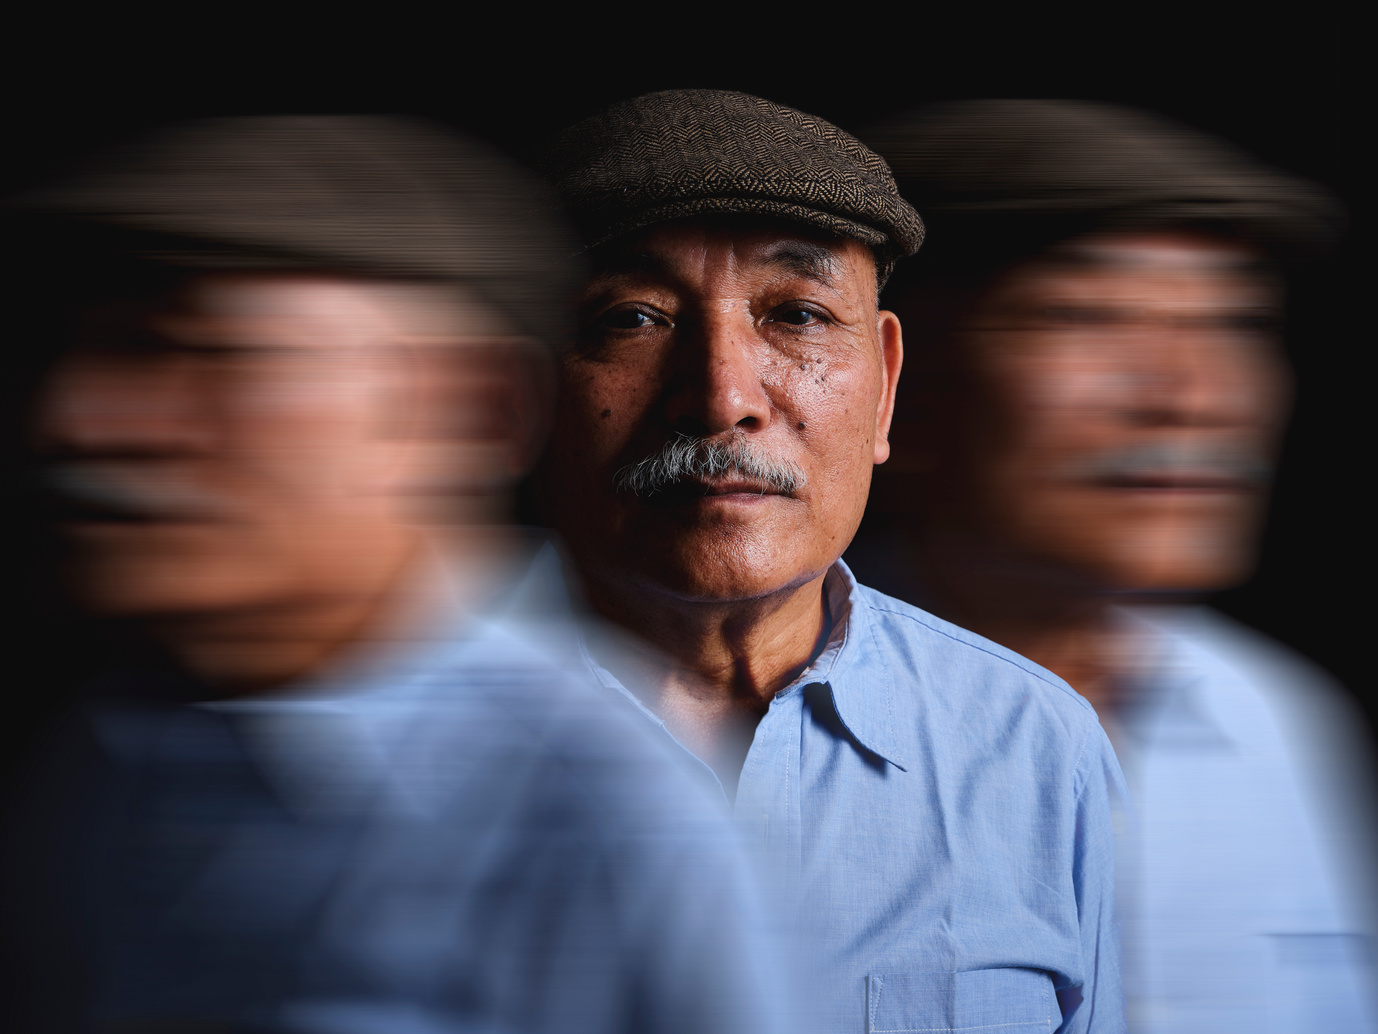 Portrait of a Man with Motion Blur